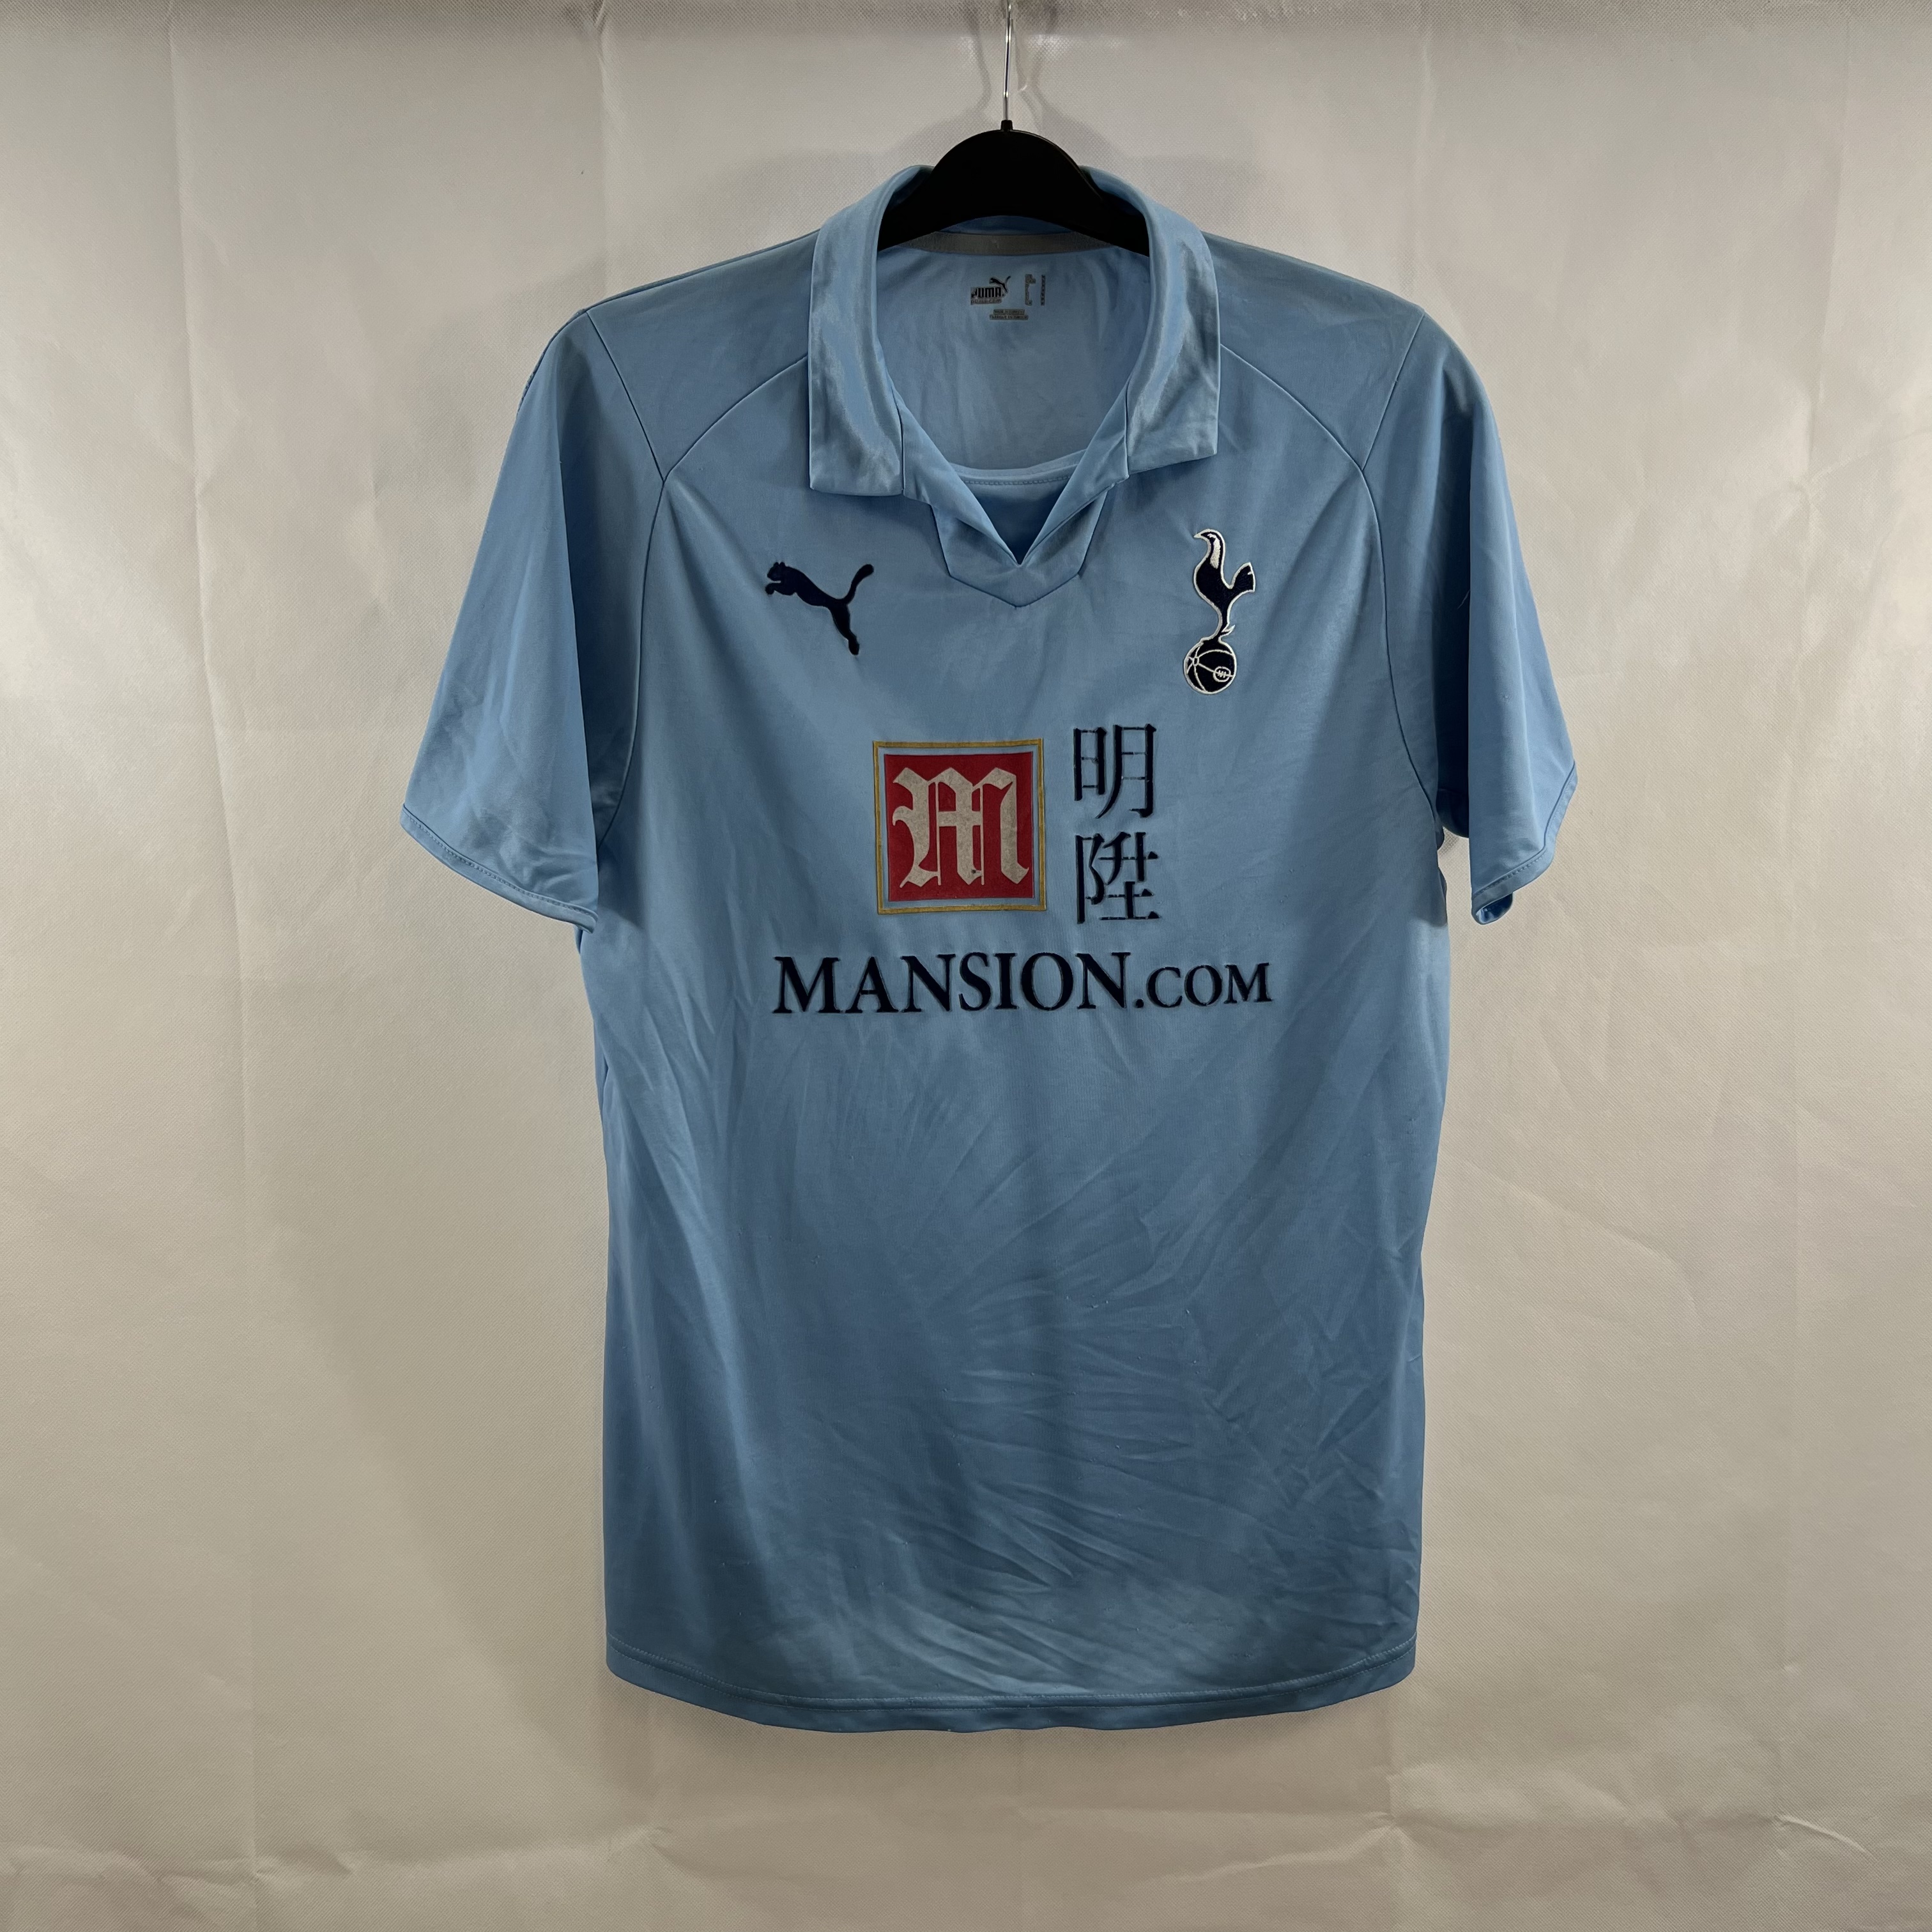 Tottenham Hotspur home shirt 2008-2009 in Medium